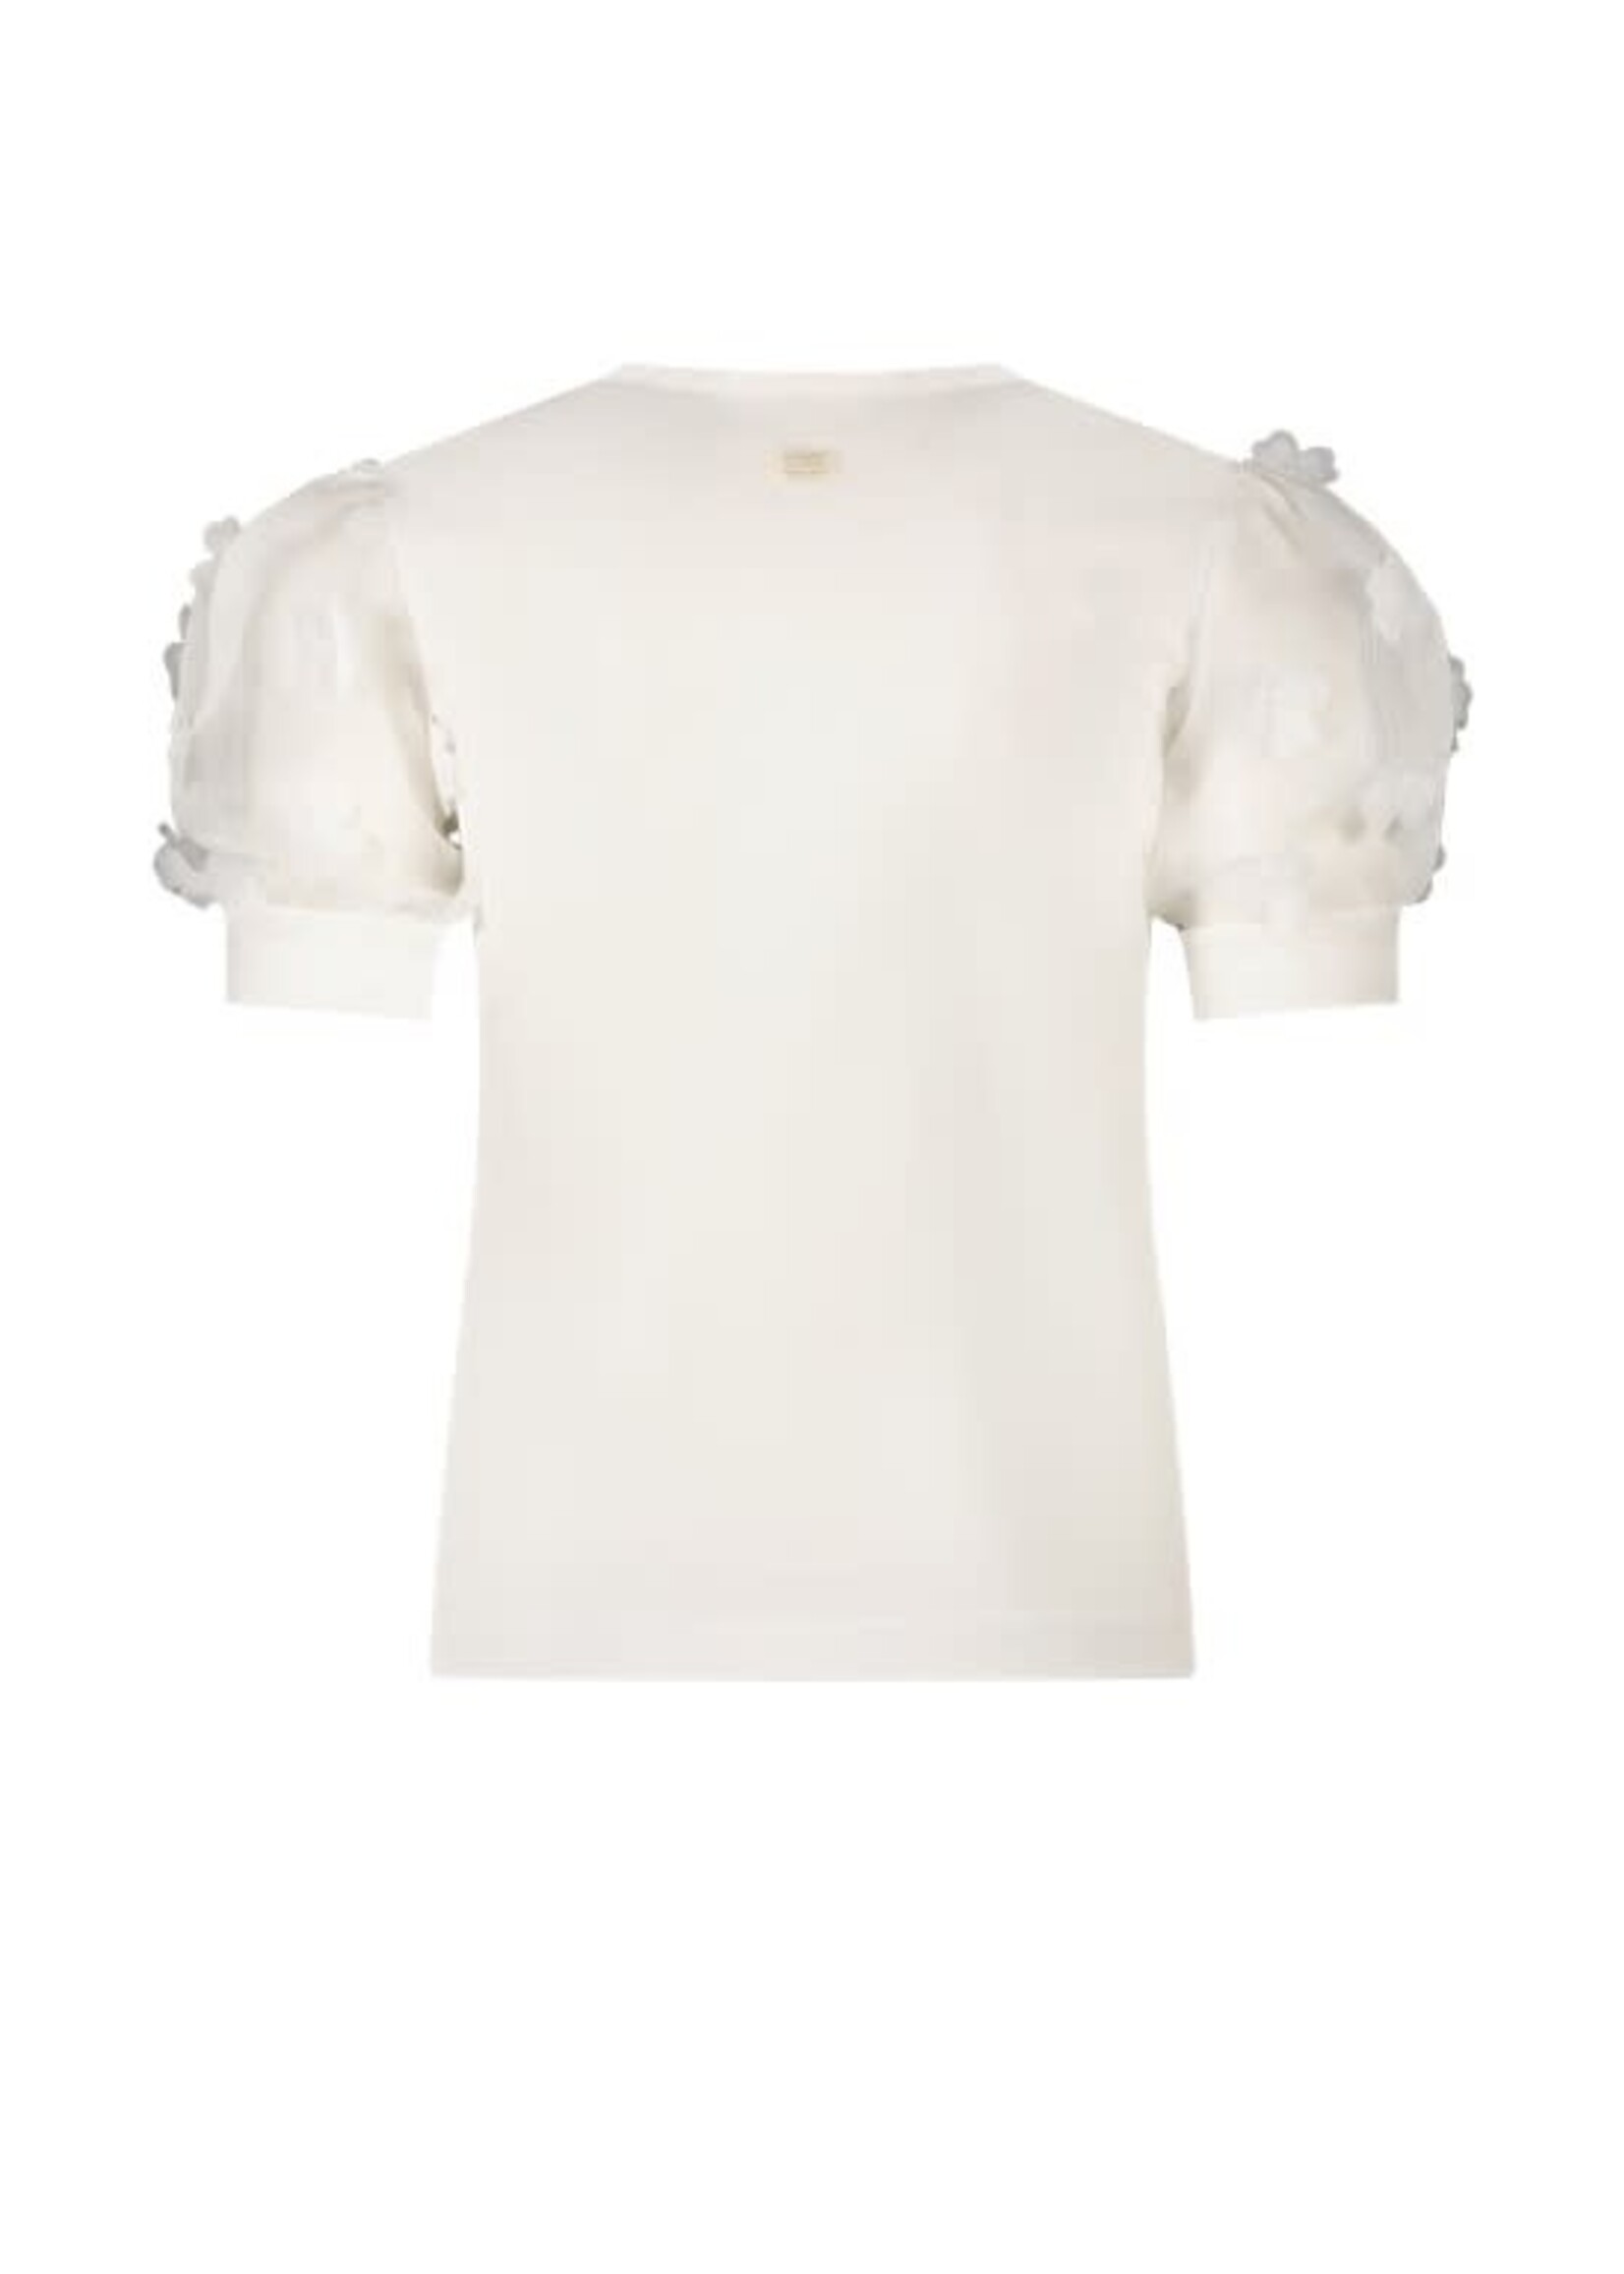 Le Chic Le Chic NOSHANY flower voile T-shirt C312-5400 Off White